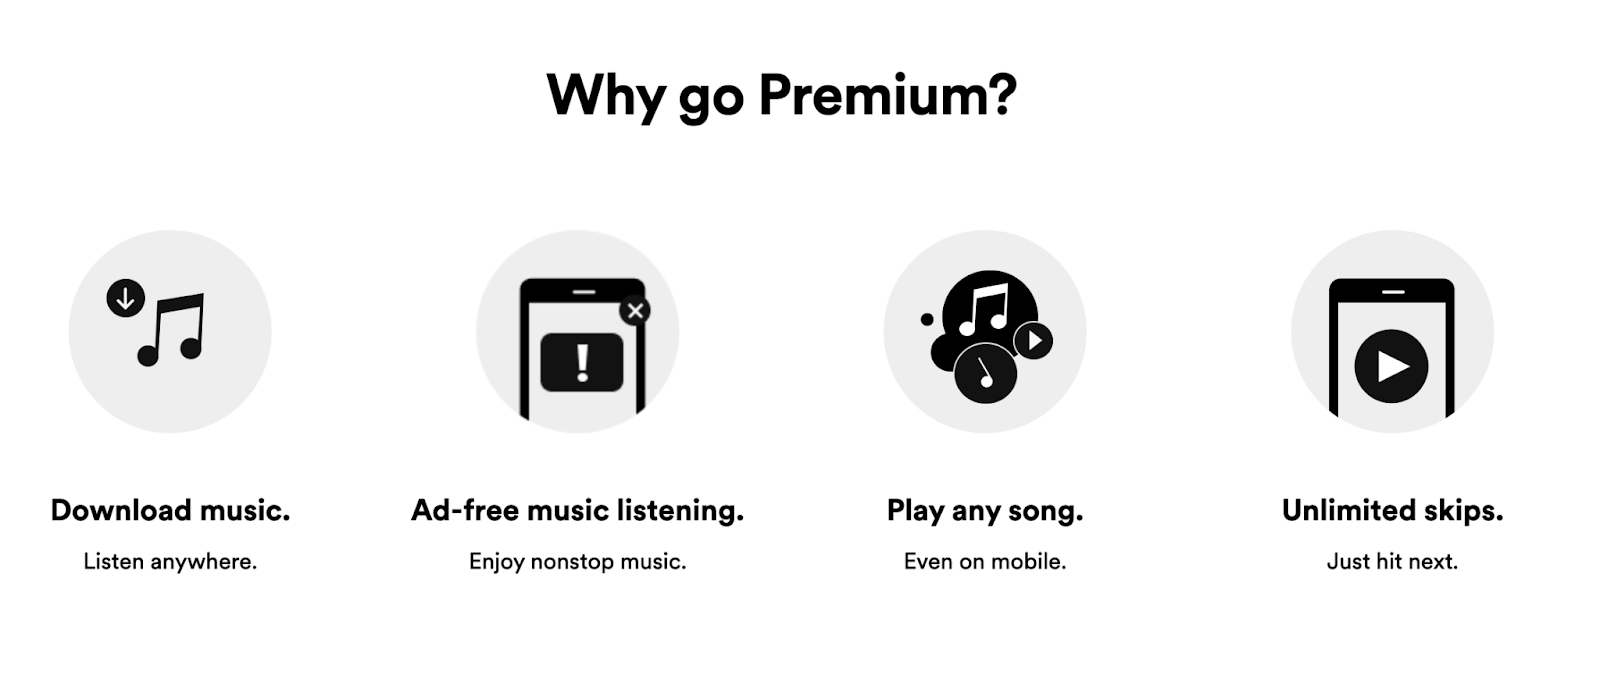 "Why go Premium?" section, listing Spotify Premium benefits